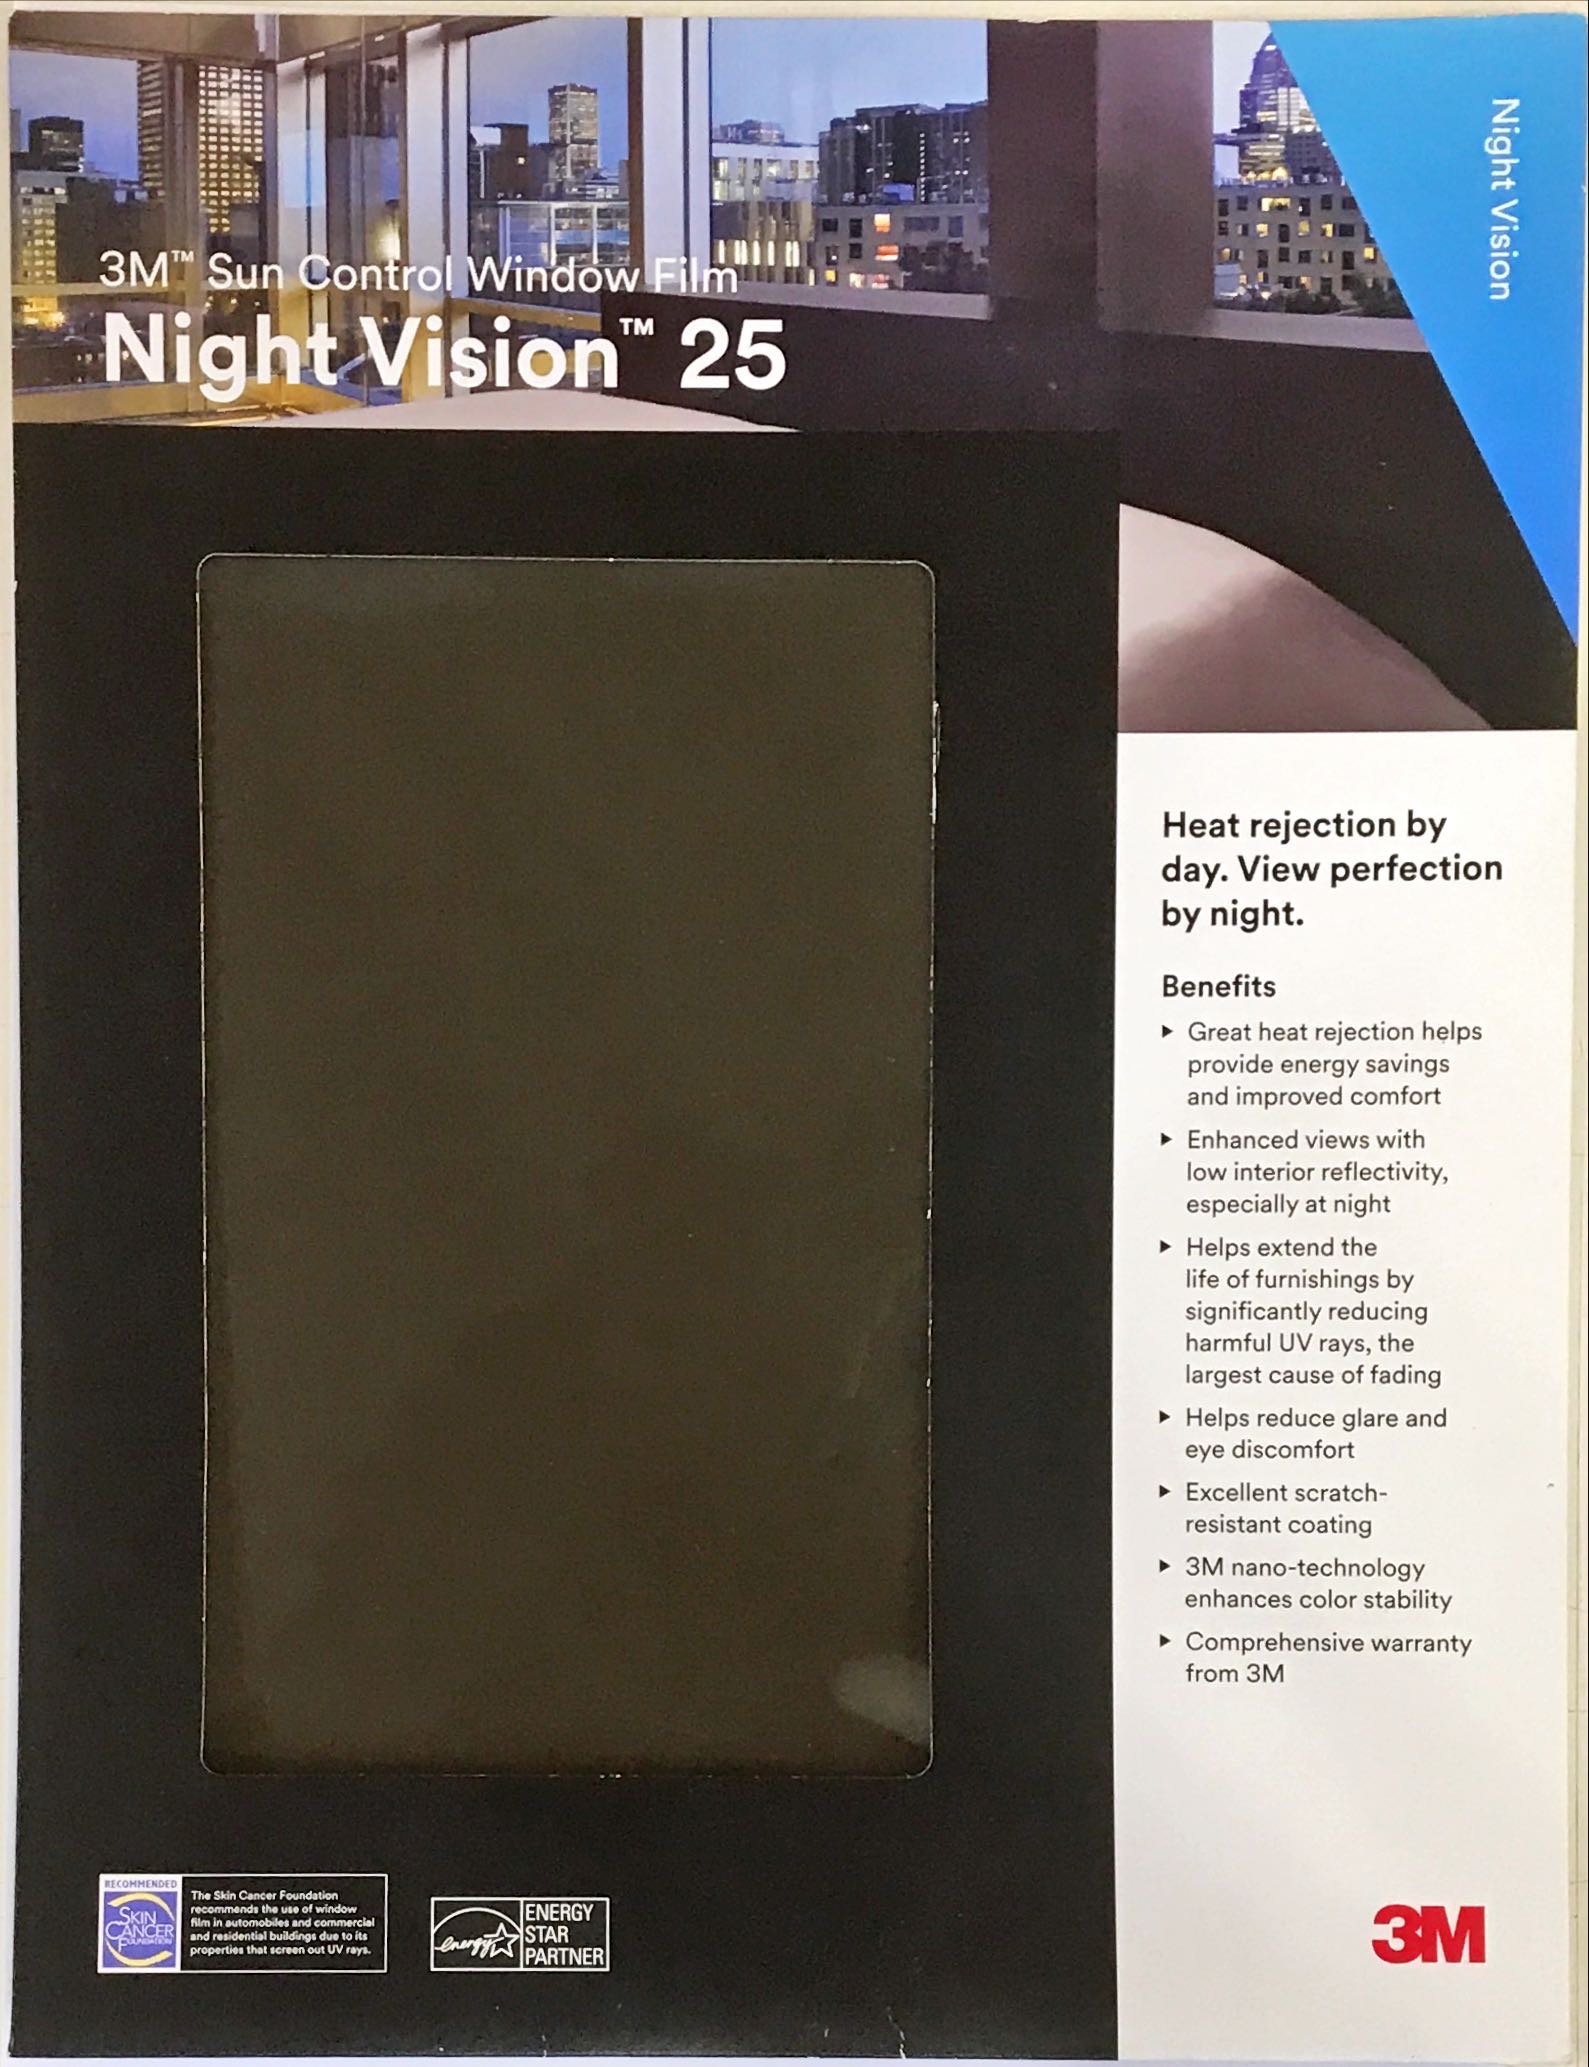 NIGHT VISION 25